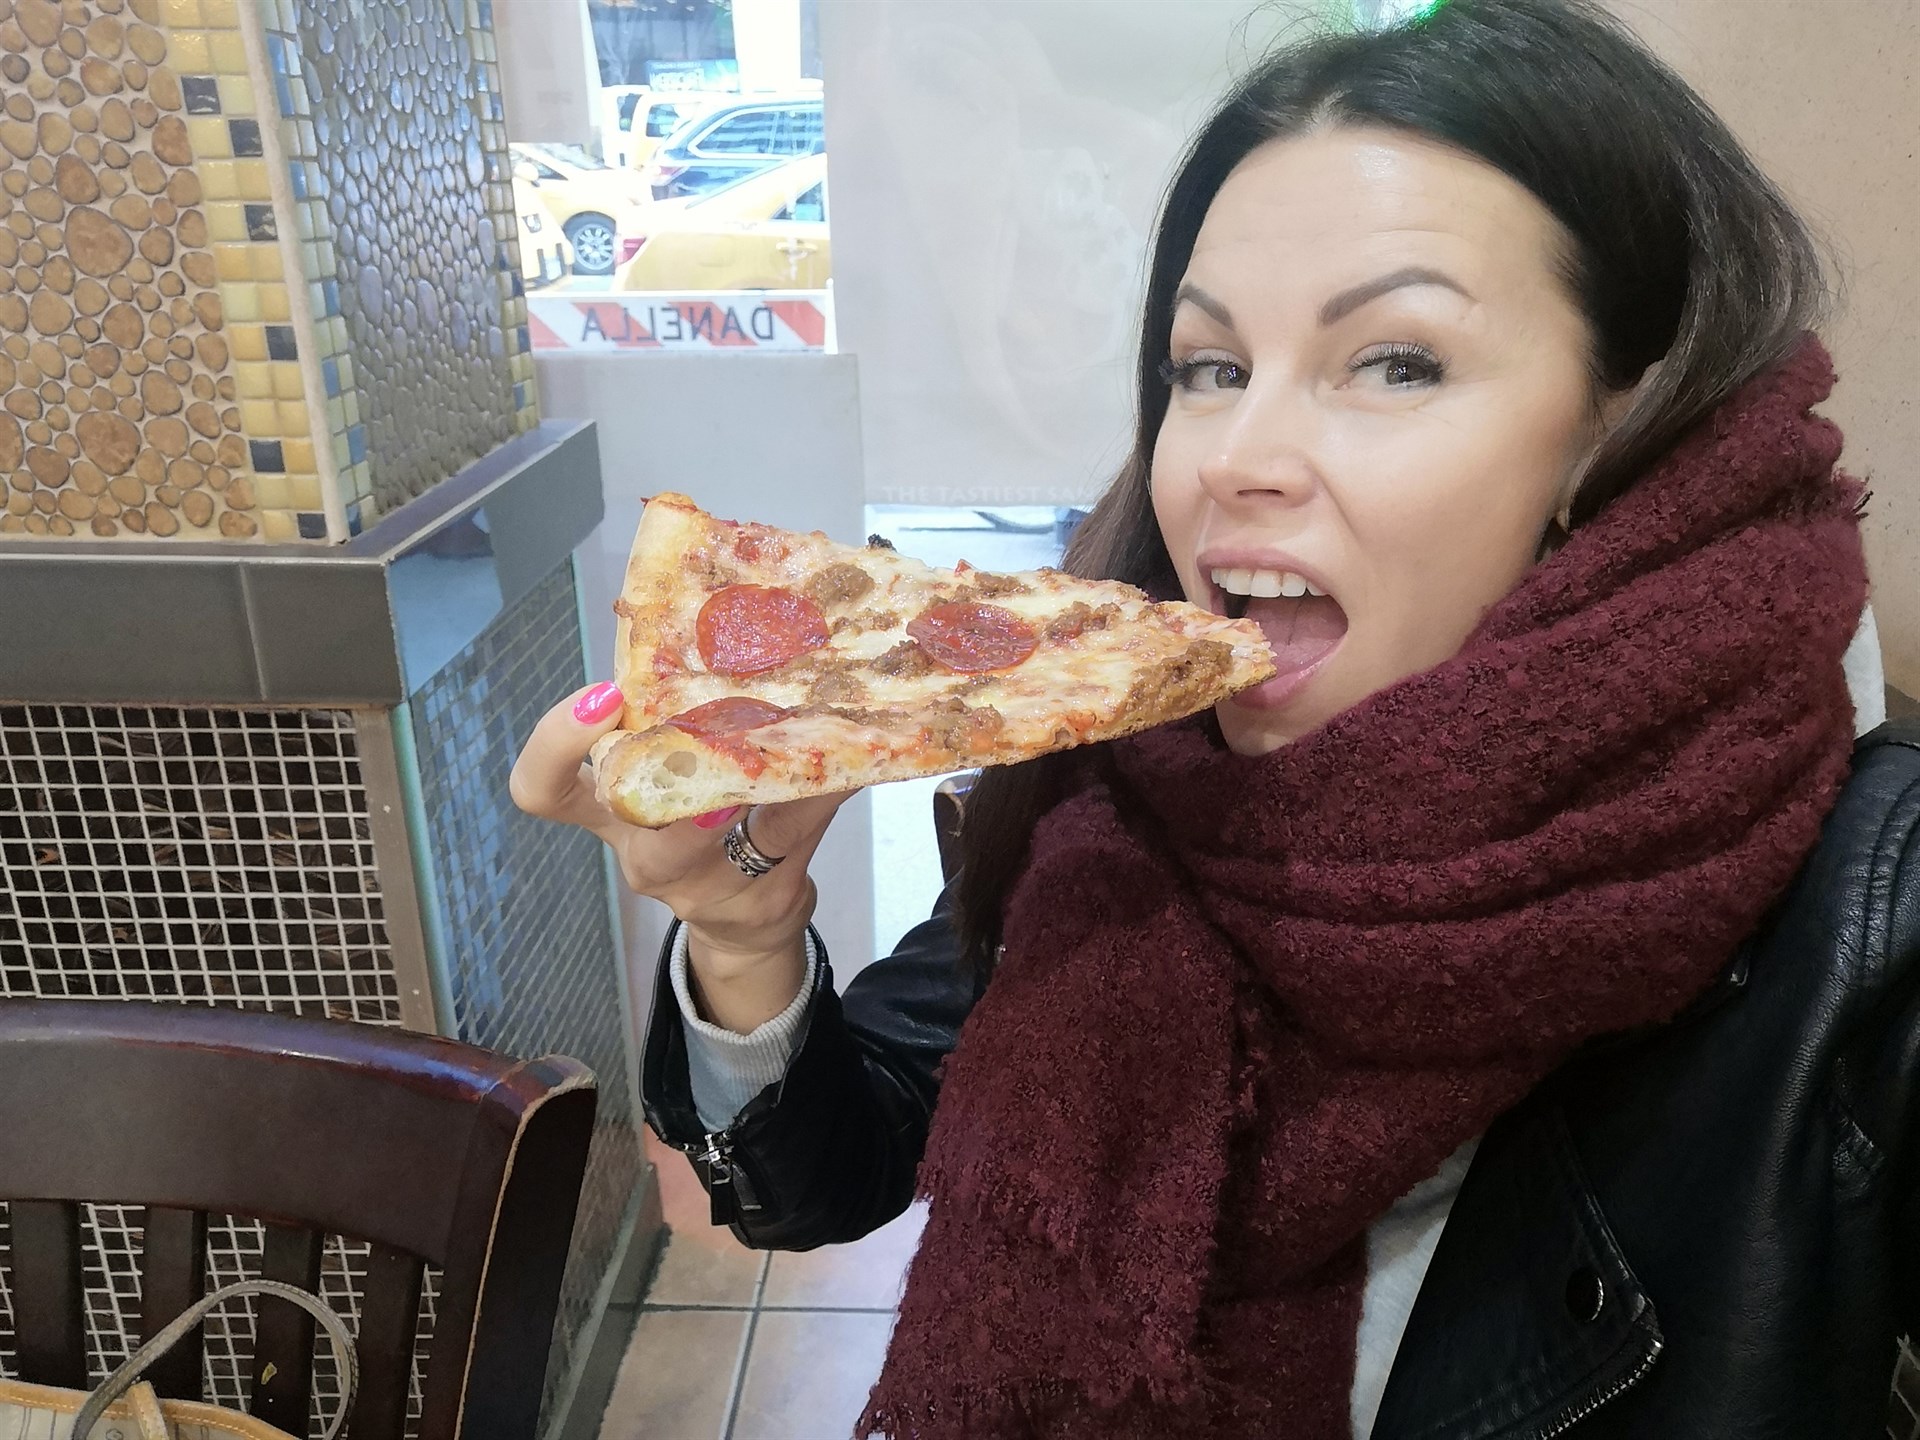 large pizza